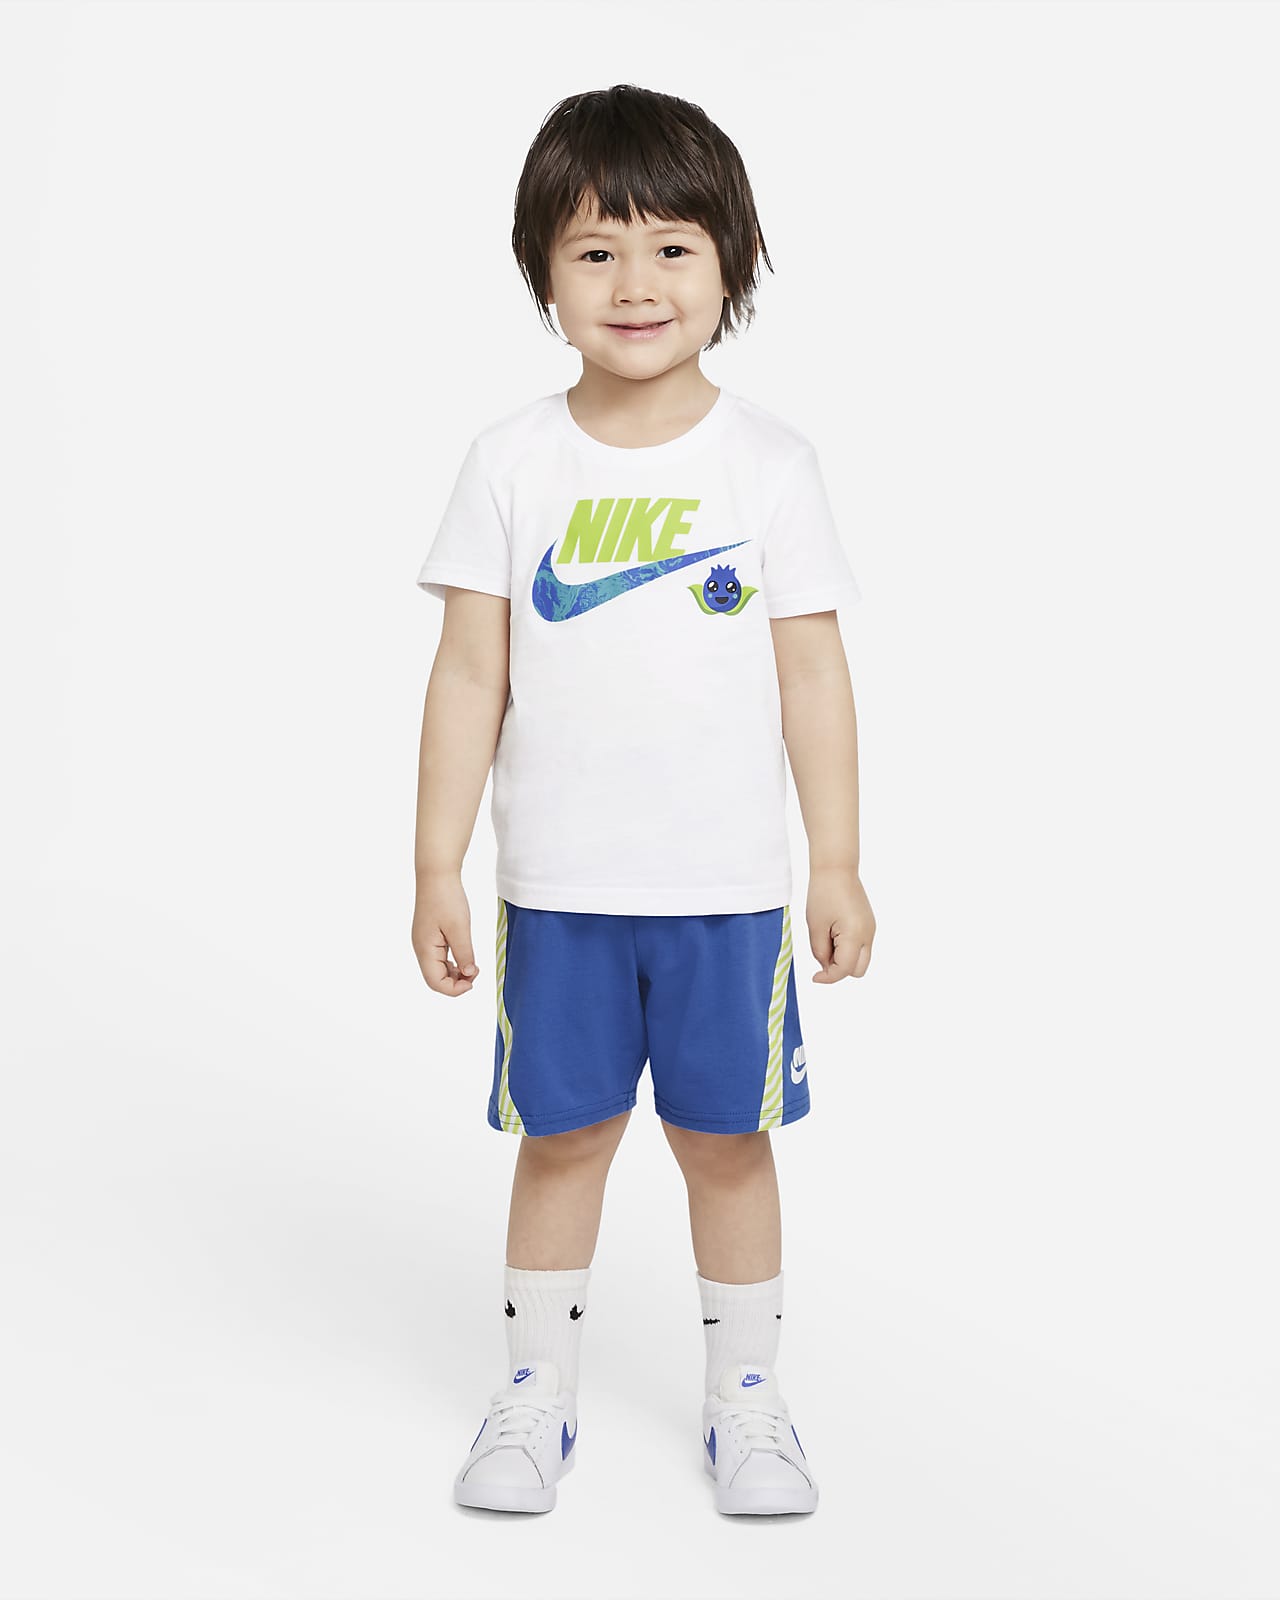 ongeluk Avonturier uitbreiden Nike Sportswear Toddler T-Shirt and Shorts Set. Nike LU